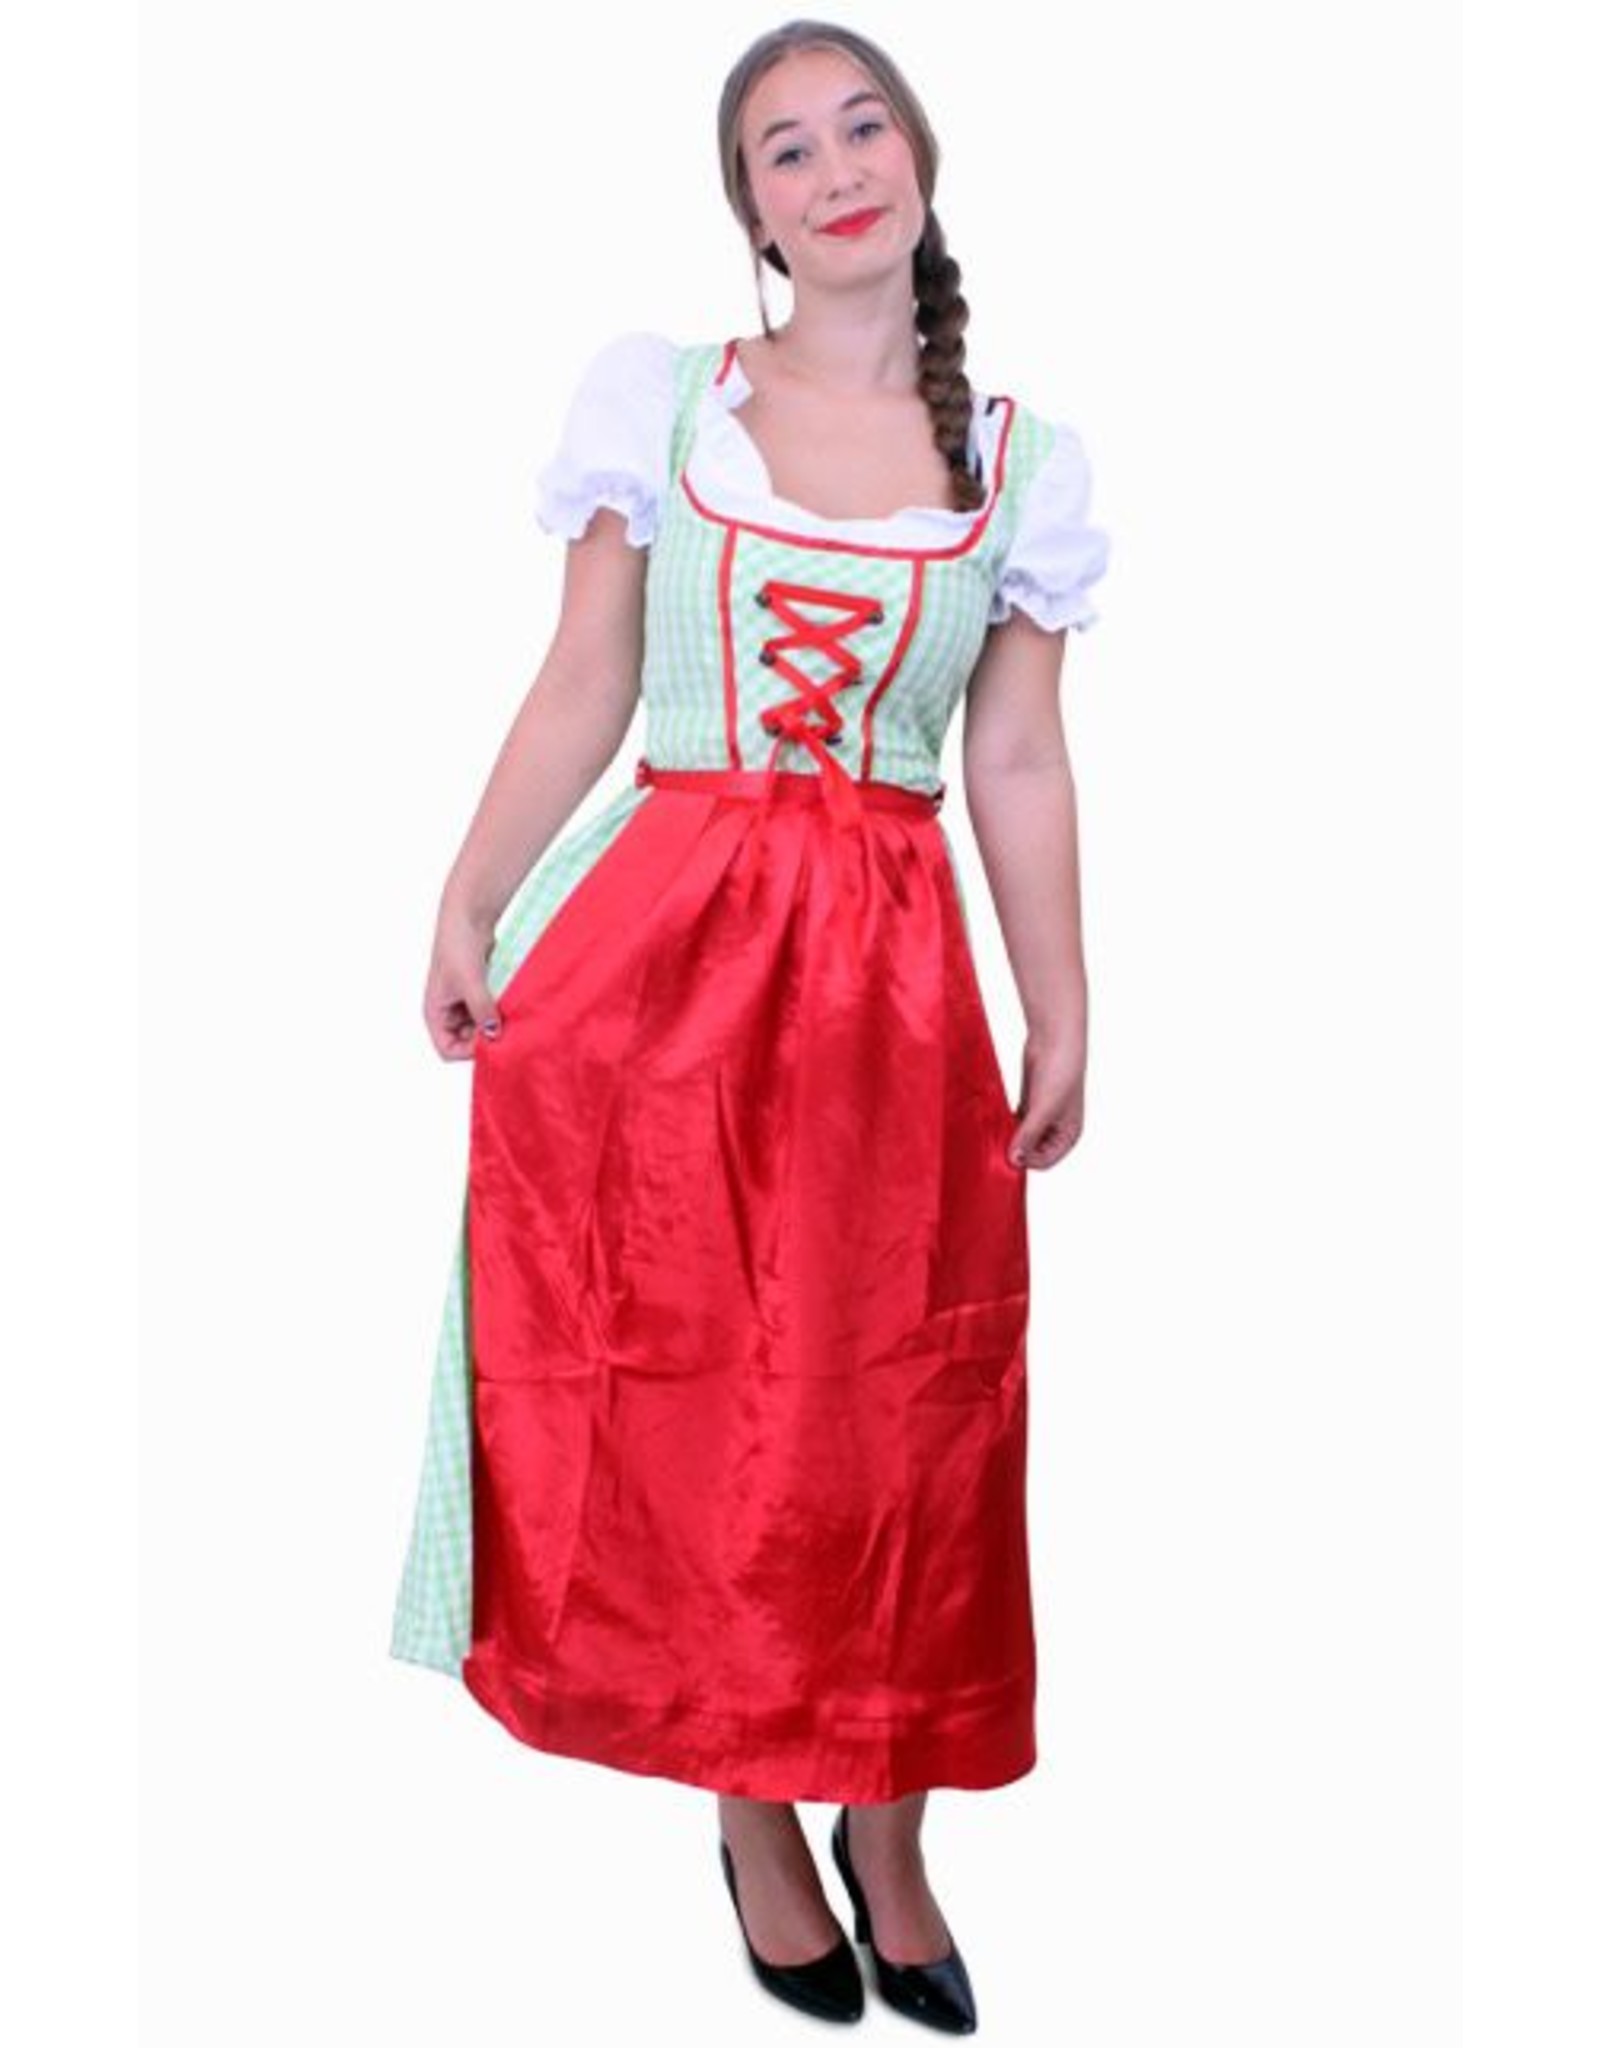 Tiroler jurk lang Sarah groen/wit ruitje, schortje rood